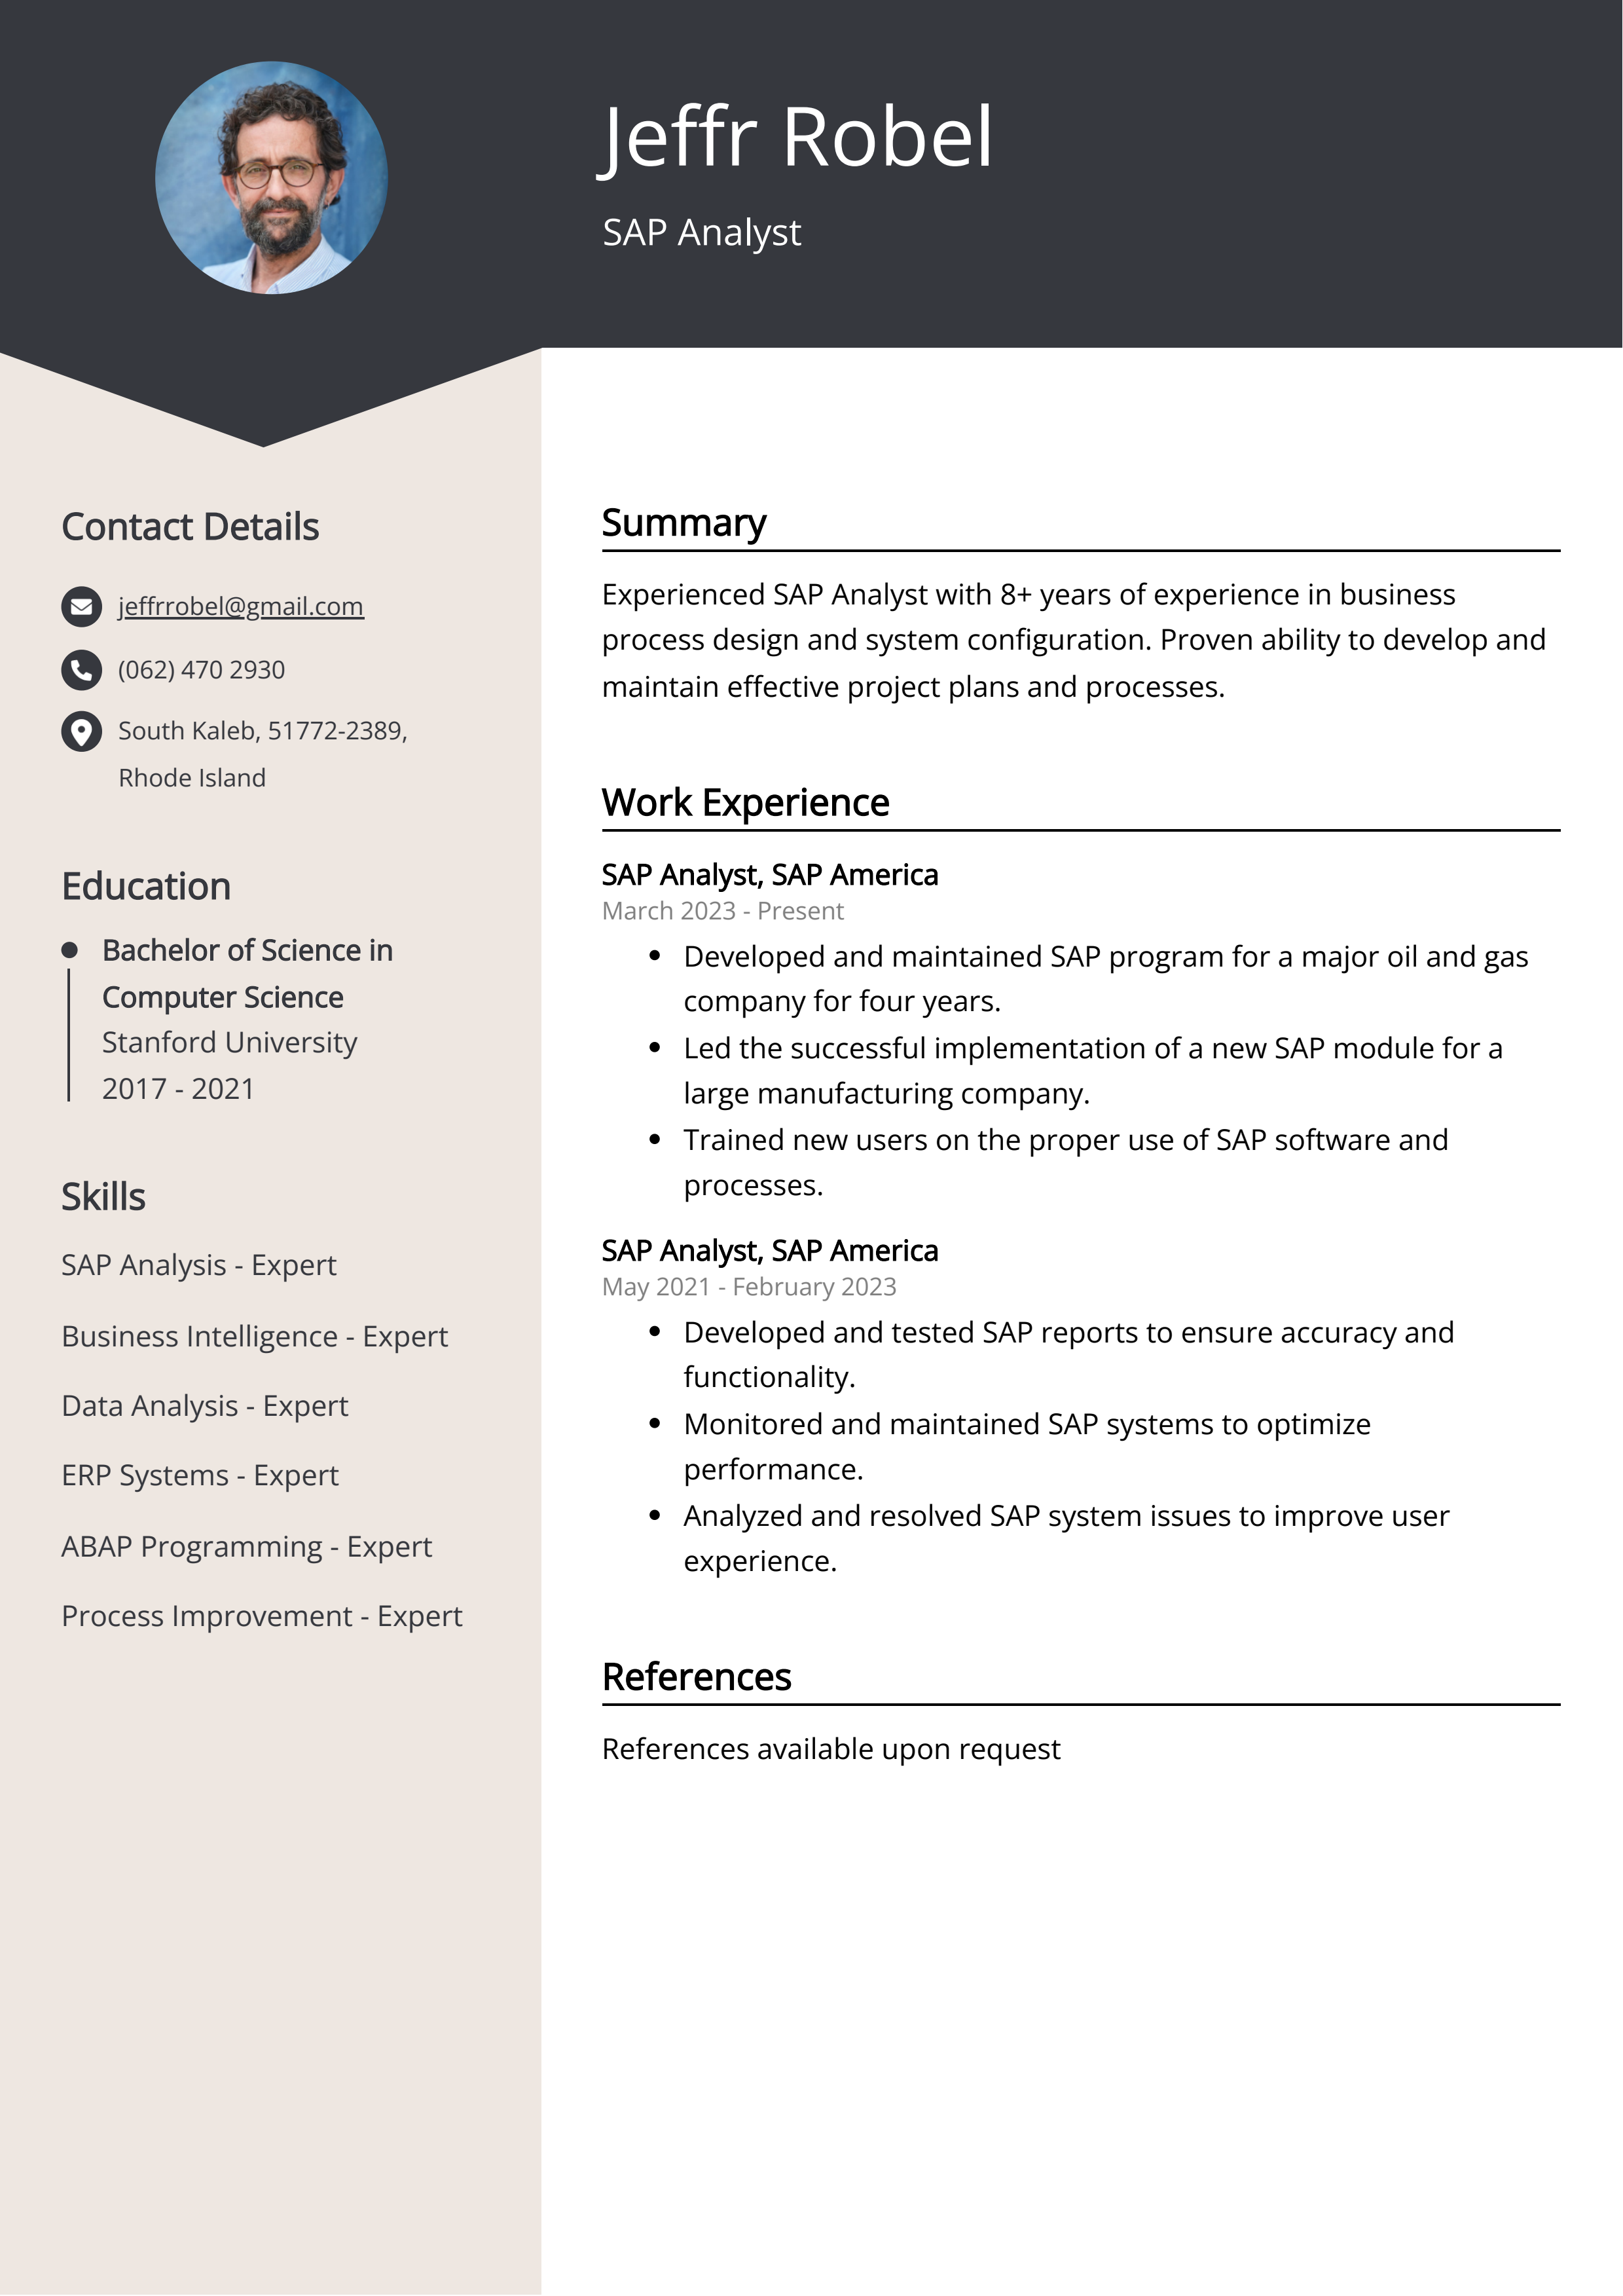 SAP Analyst CV Example